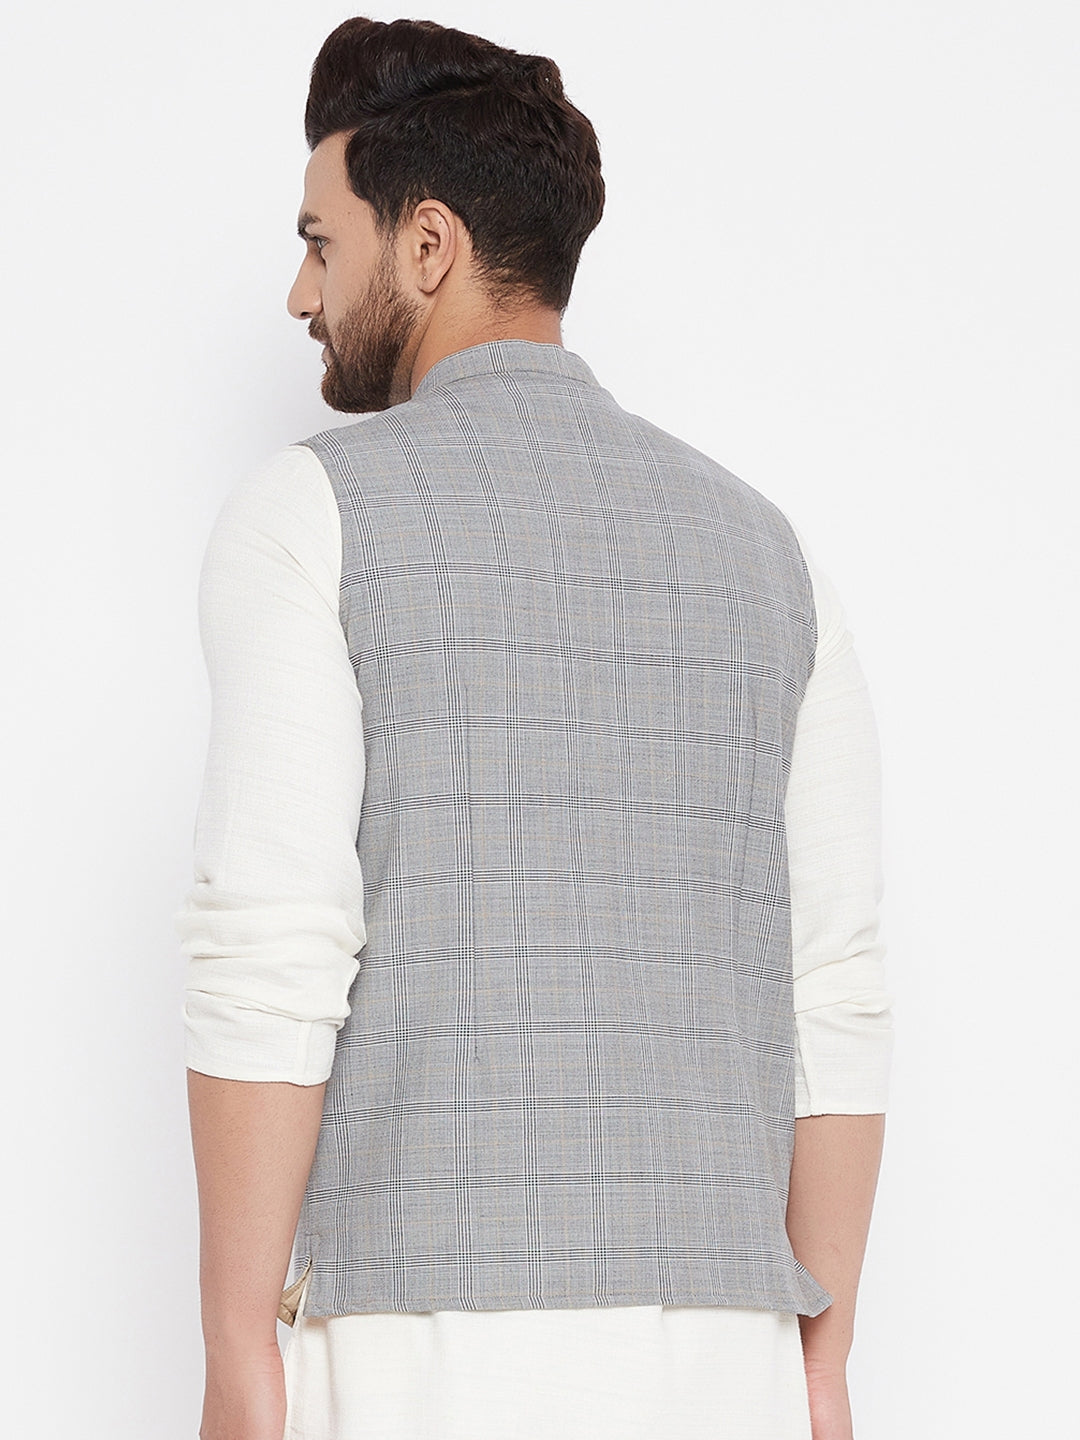 Men's Grey Woven Design Jacket - Even Apparels